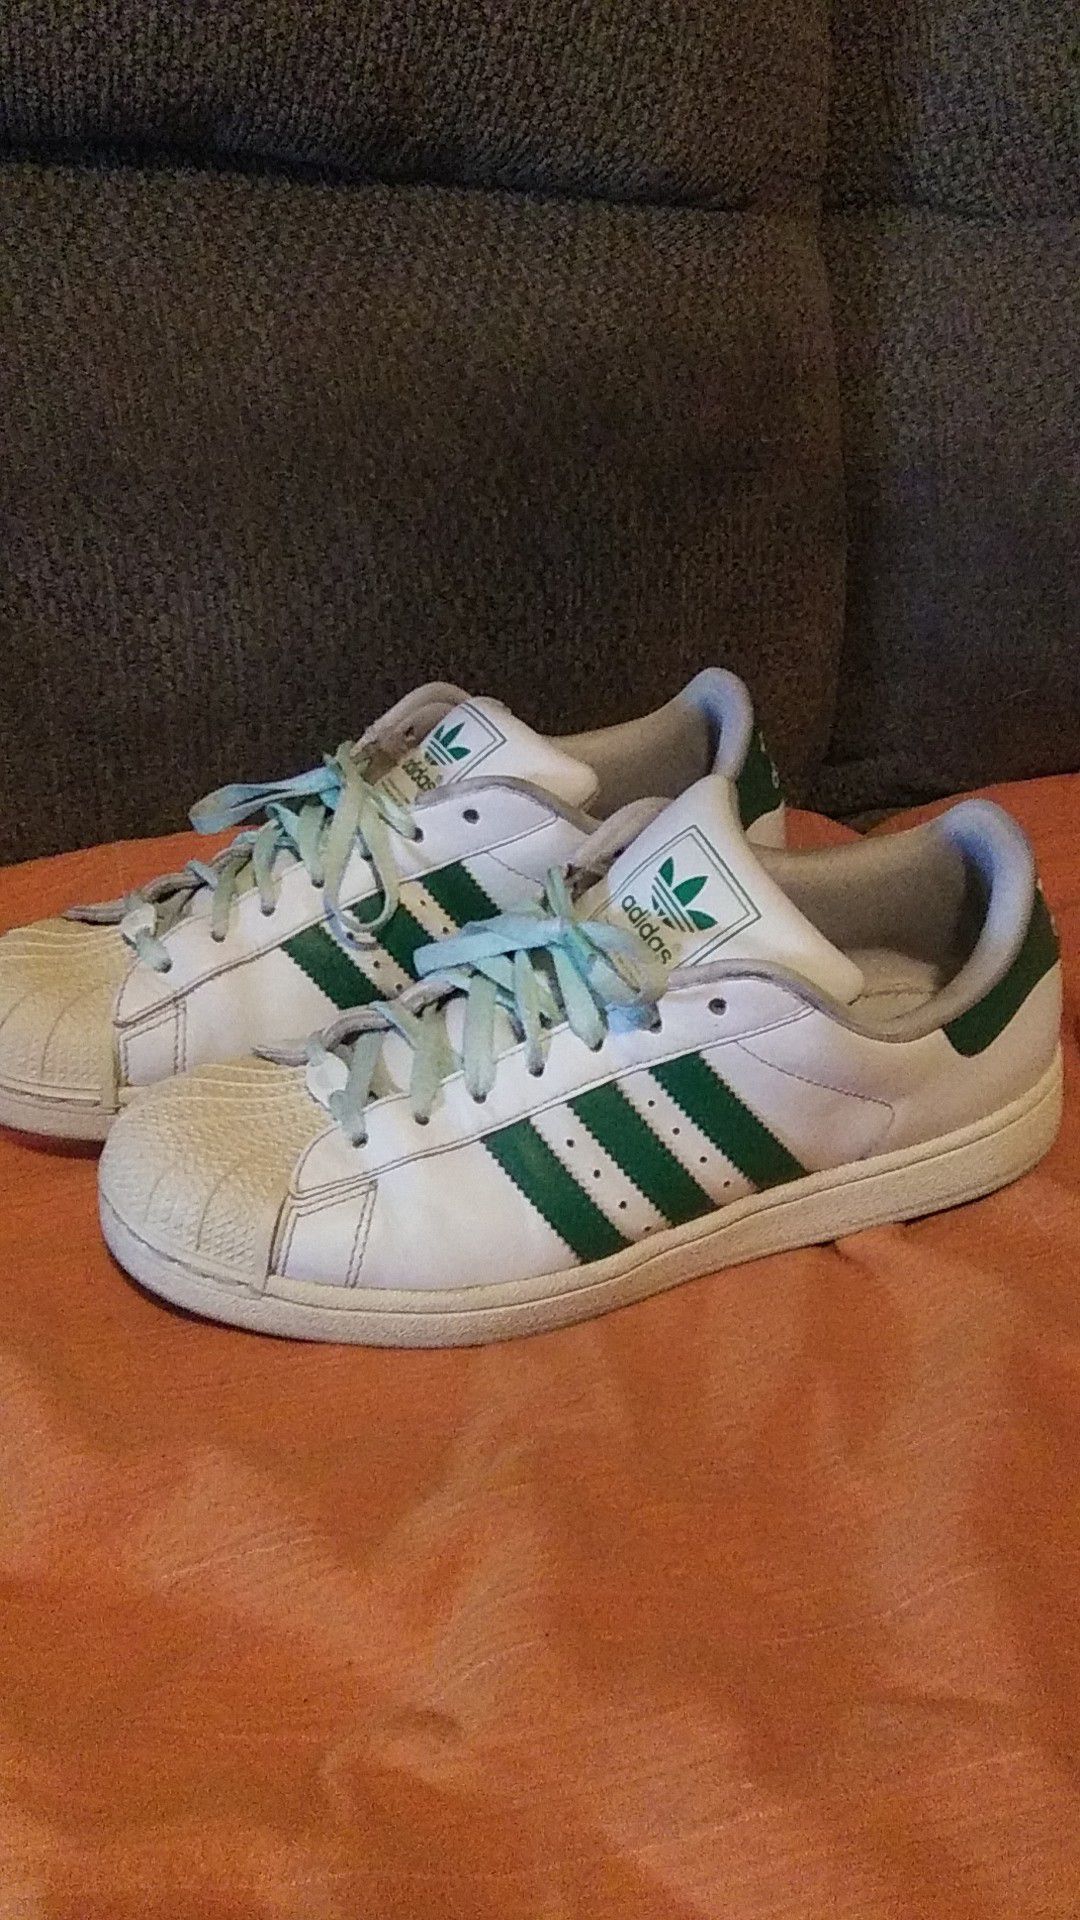 Green n white Adidas shoes